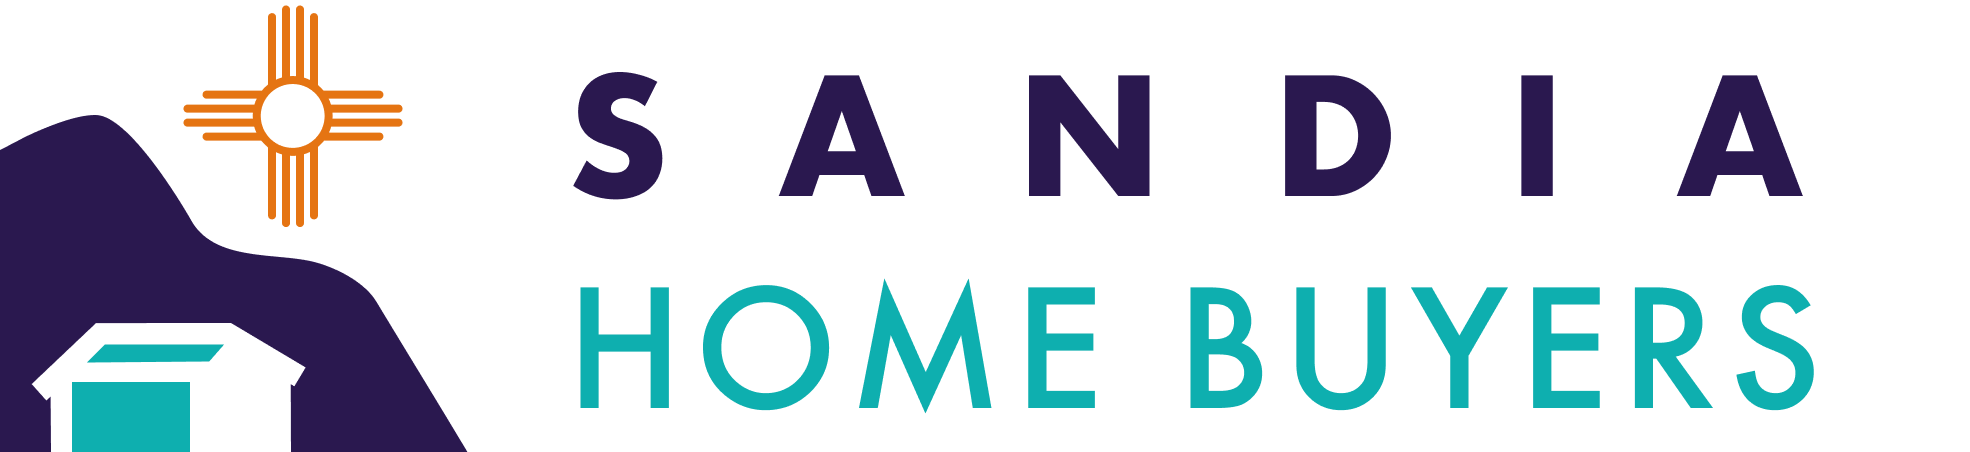 Sandia Home Buyers  logo